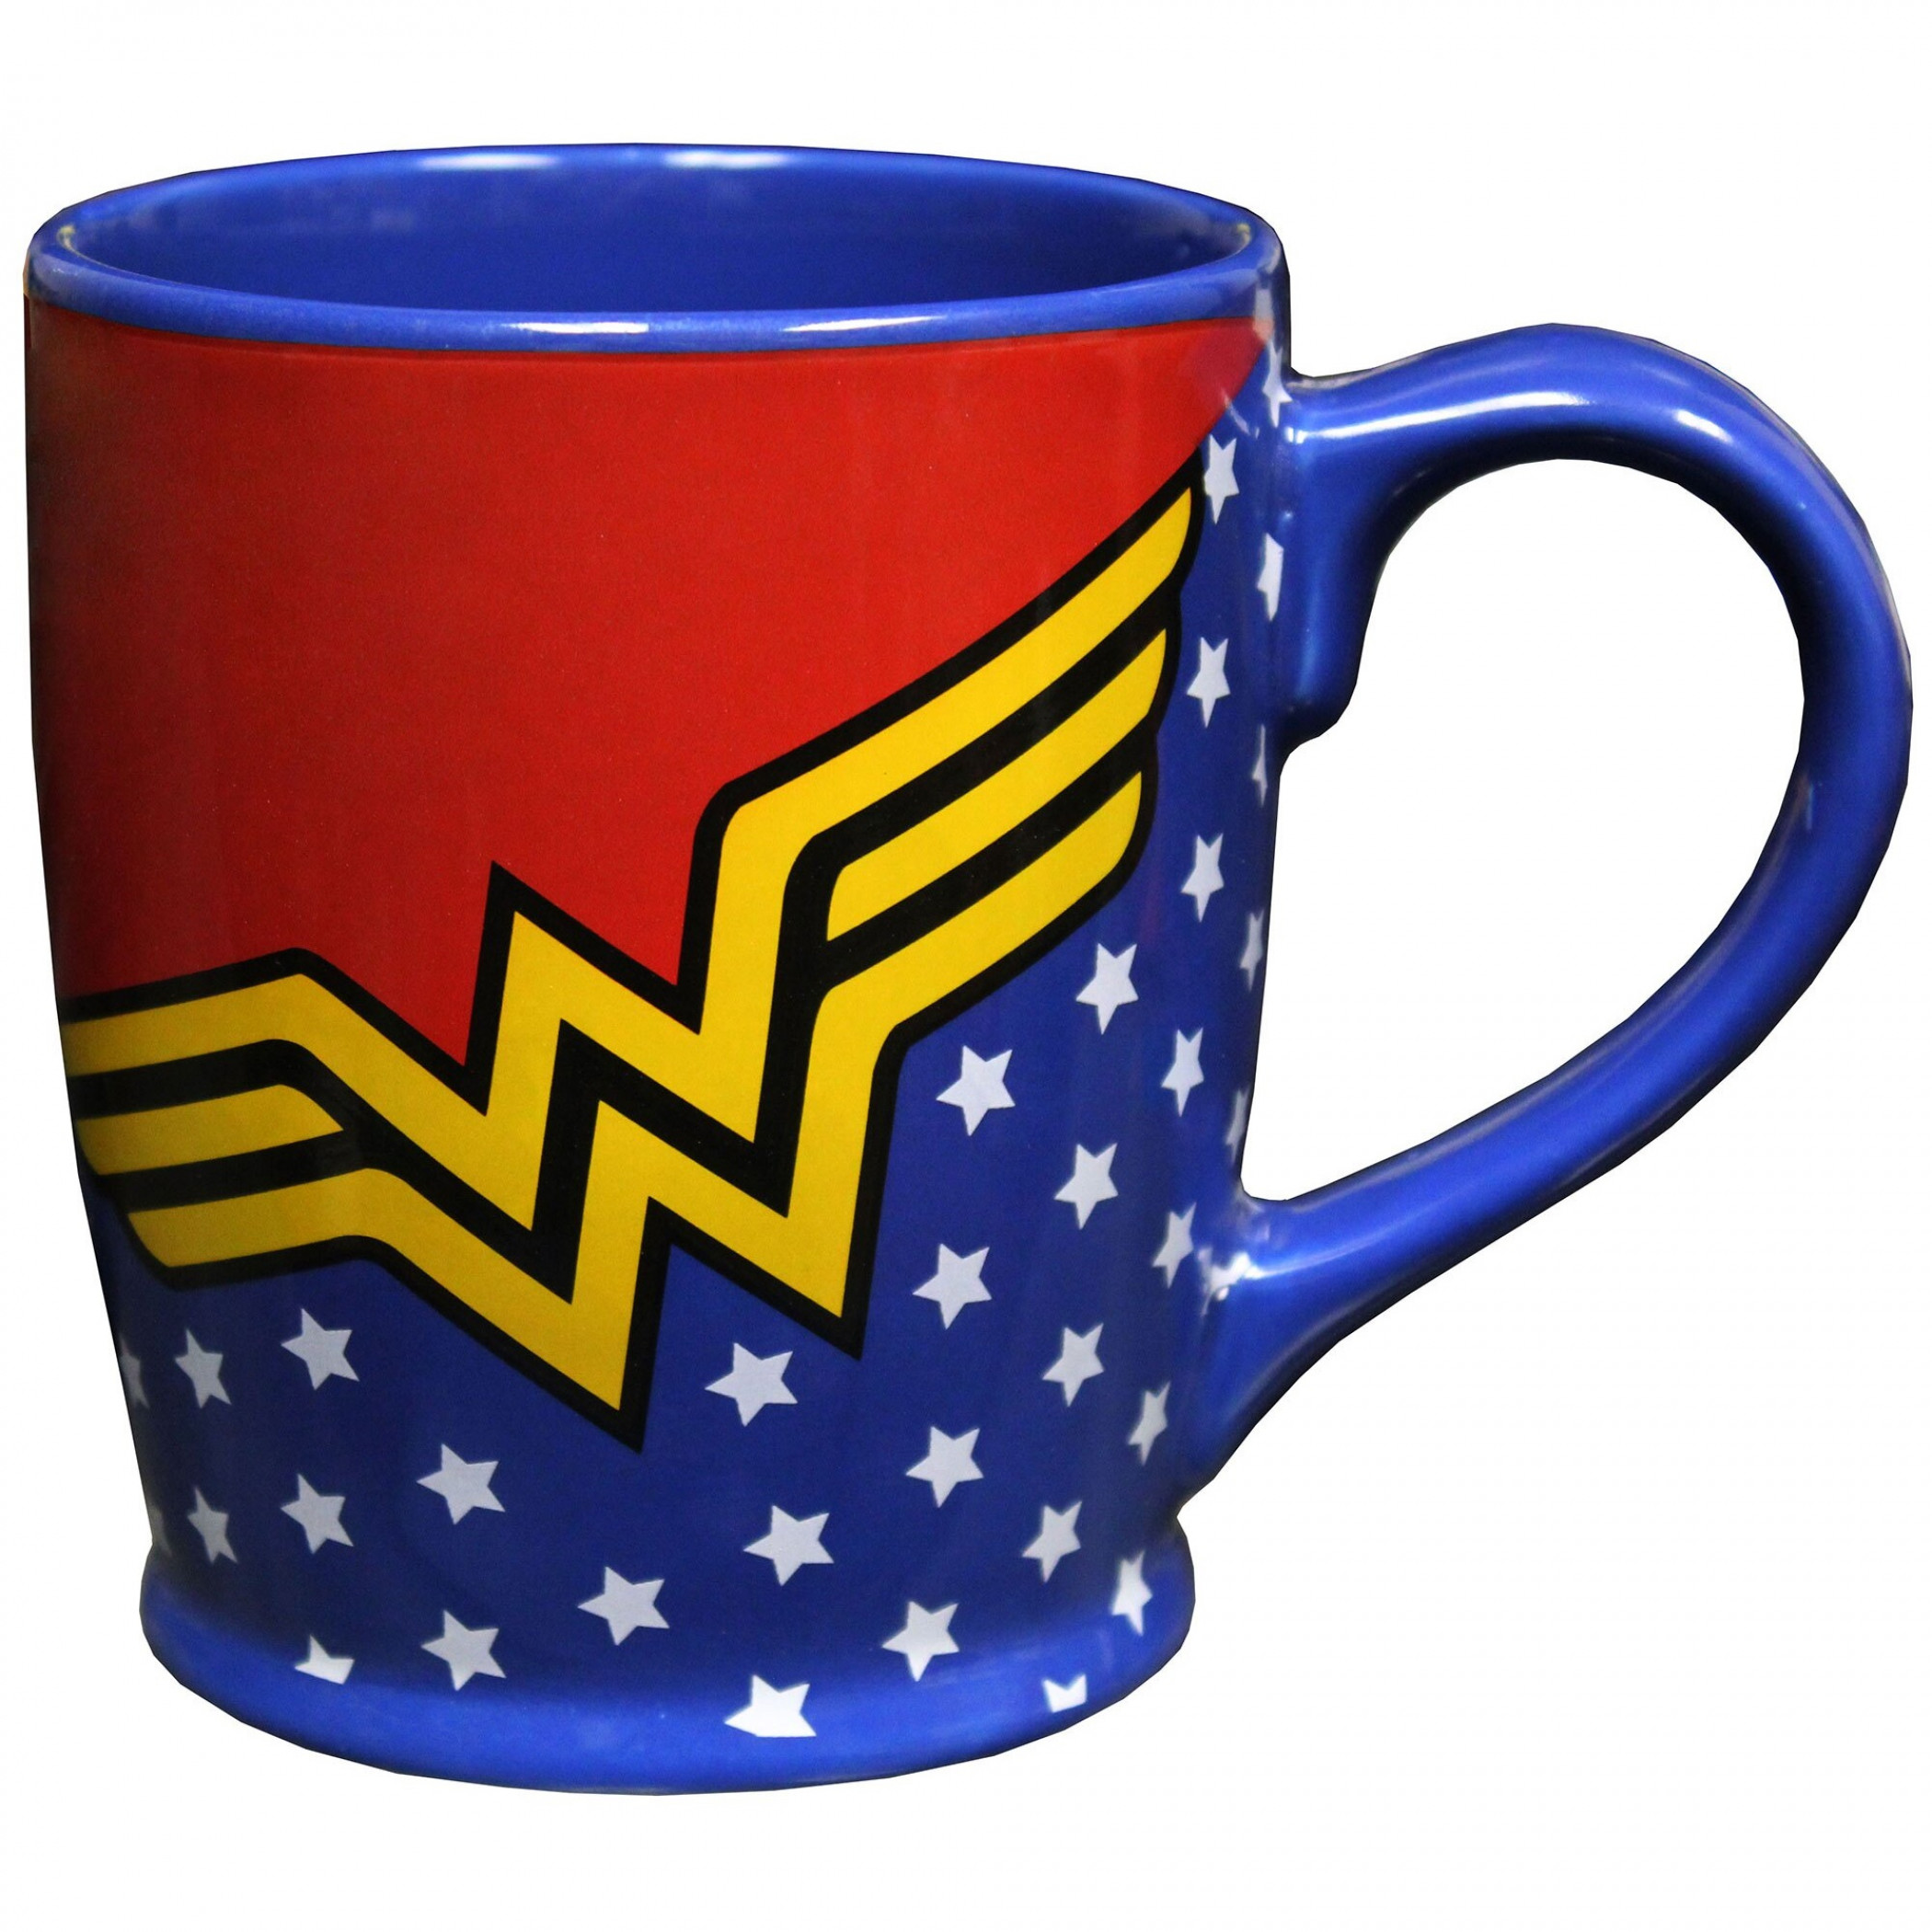 Wonder Woman Stars 15 Ounce Mug